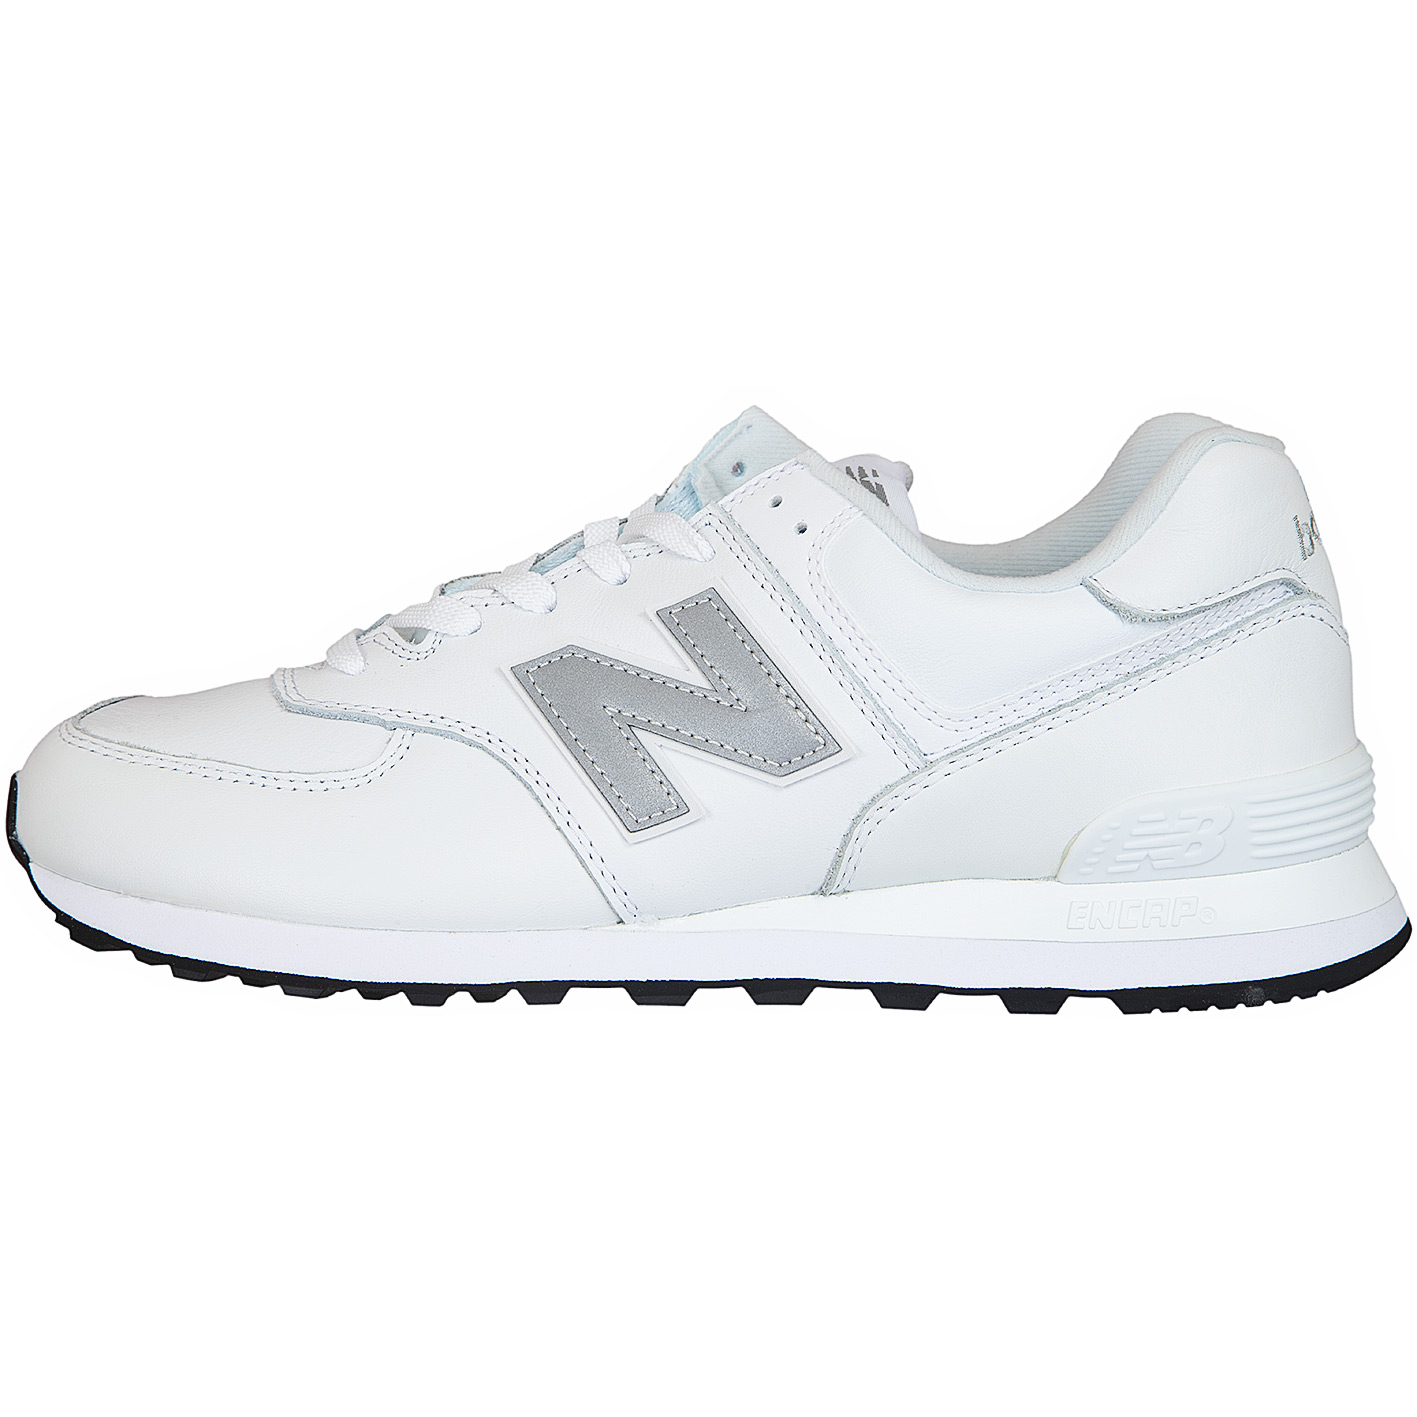 ☆ New Balance Sneaker 574 Leder/Synthetik weiß/grau - hier bestellen!